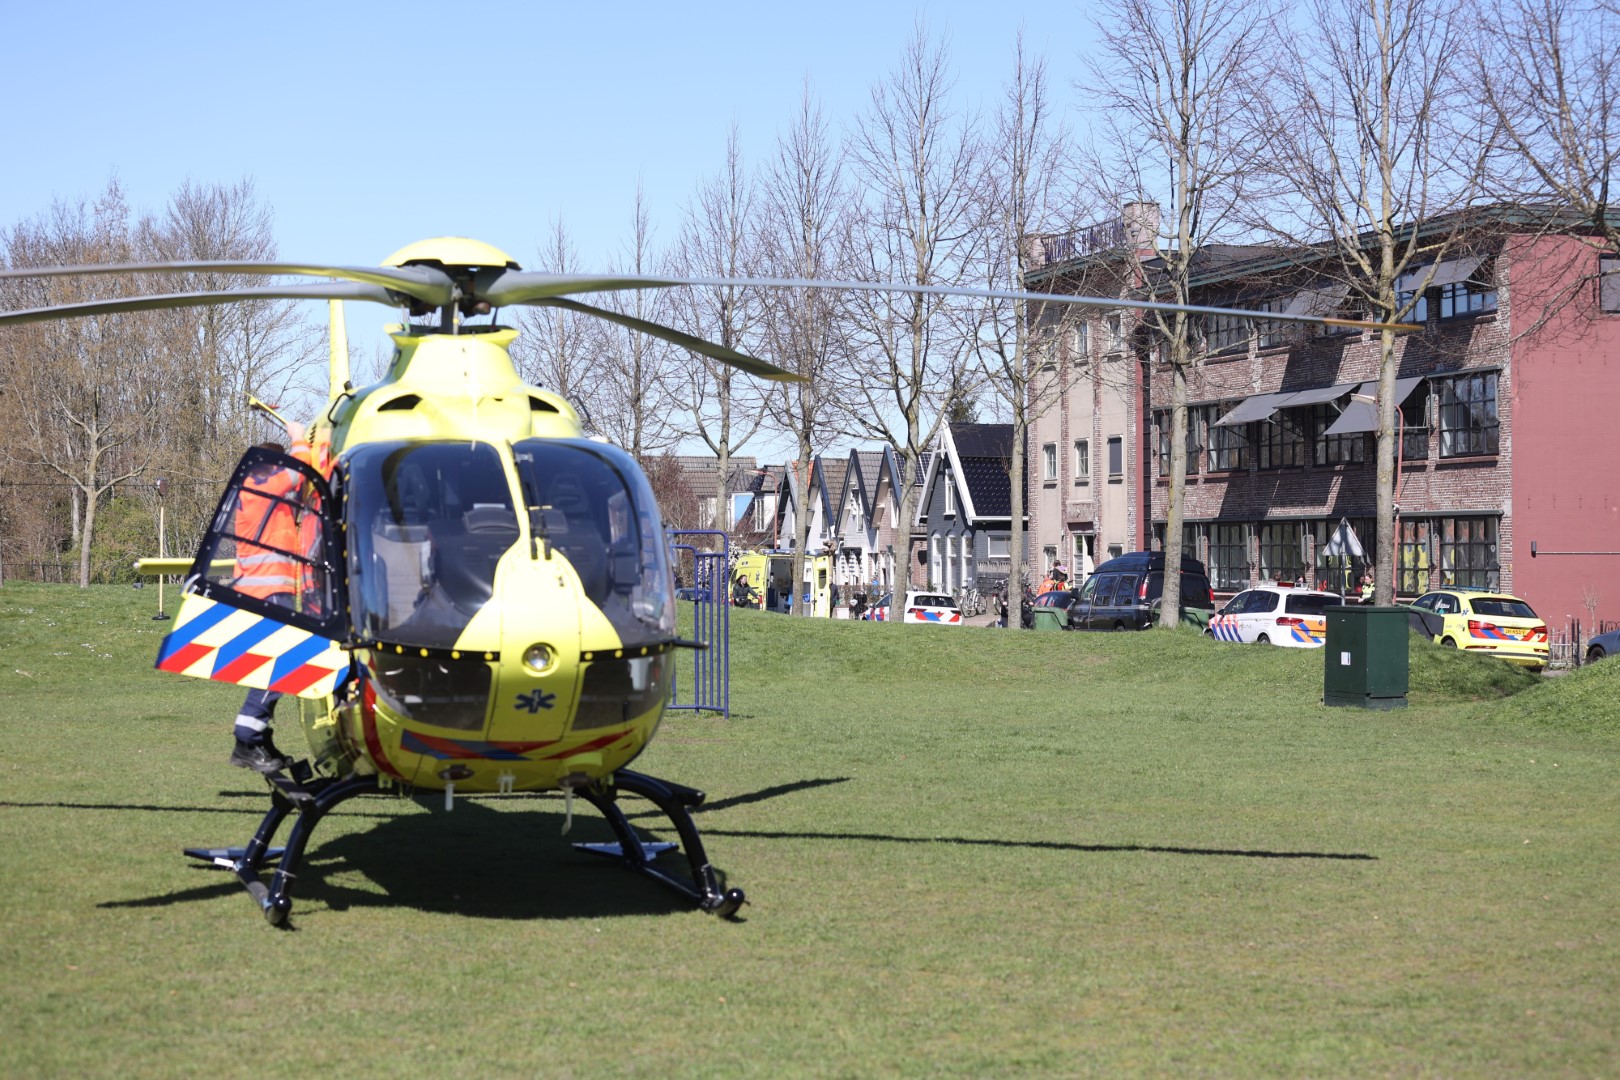 Steekincident bij GGZ-instelling, traumahelikopter ingezet